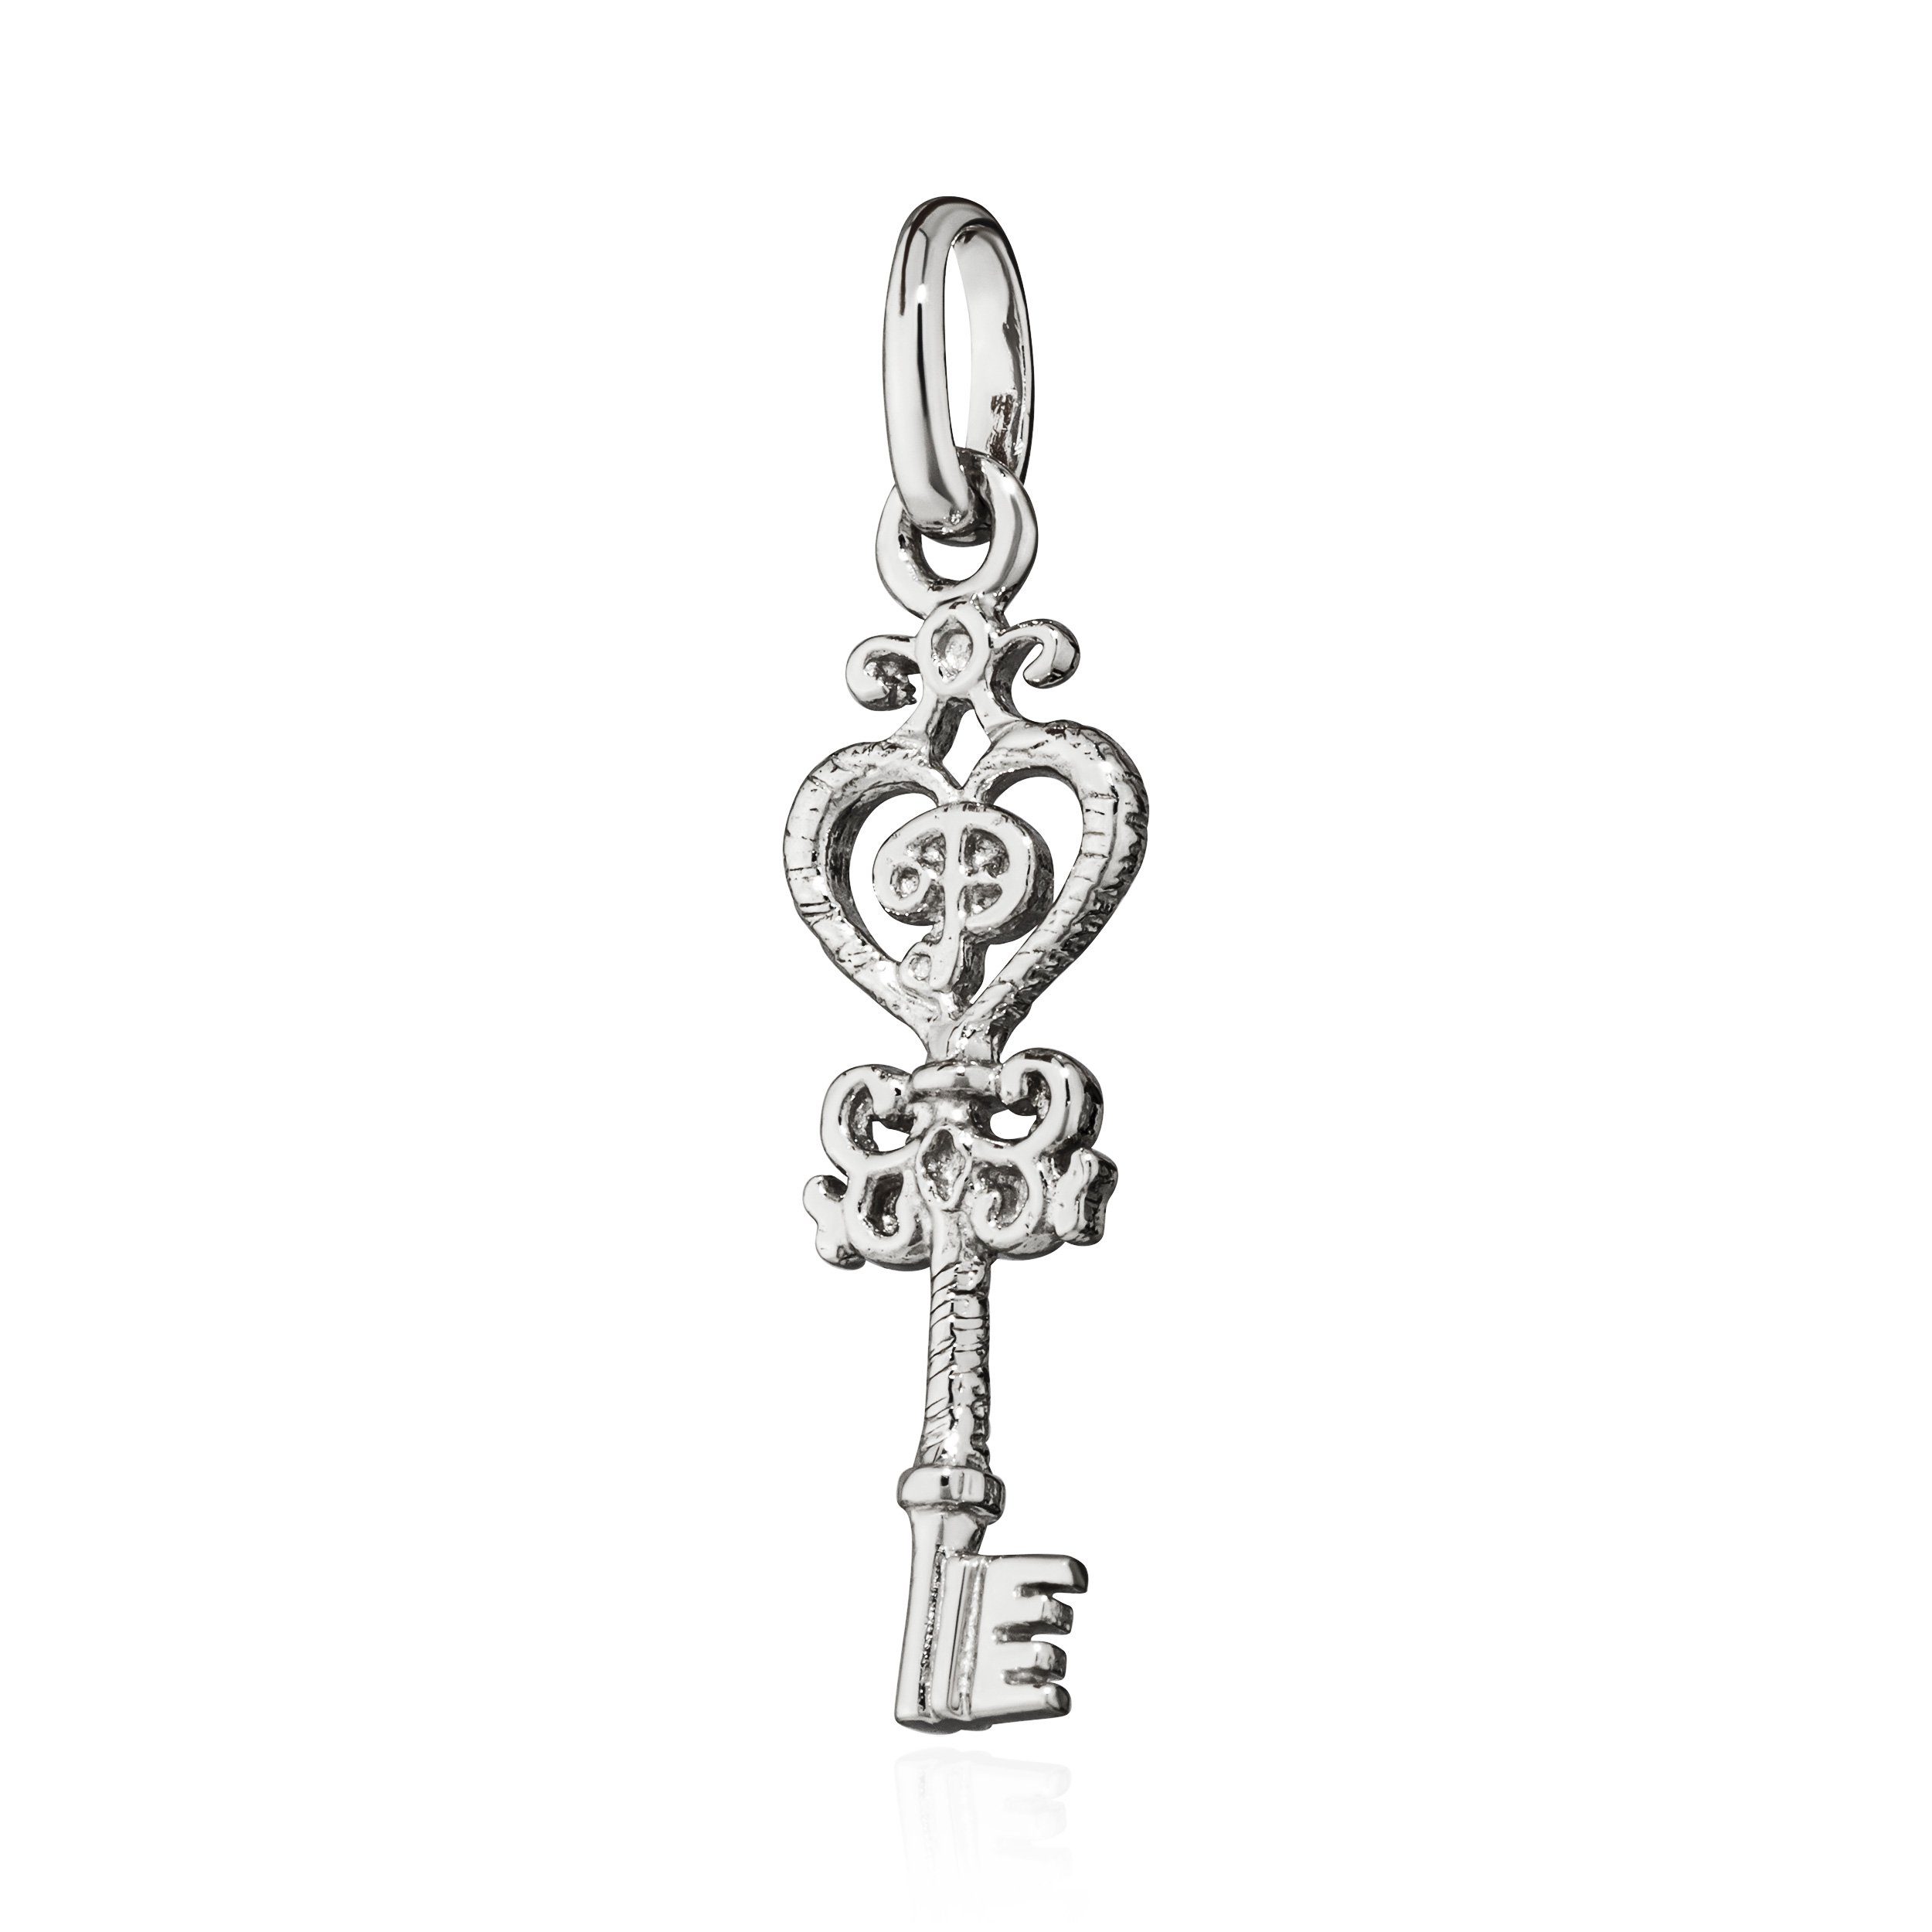 NKlaus Kettenanhänger Kettenanhänger Schlüssel 22x7mm 925 rhodiniert Silber Amulett Talisman